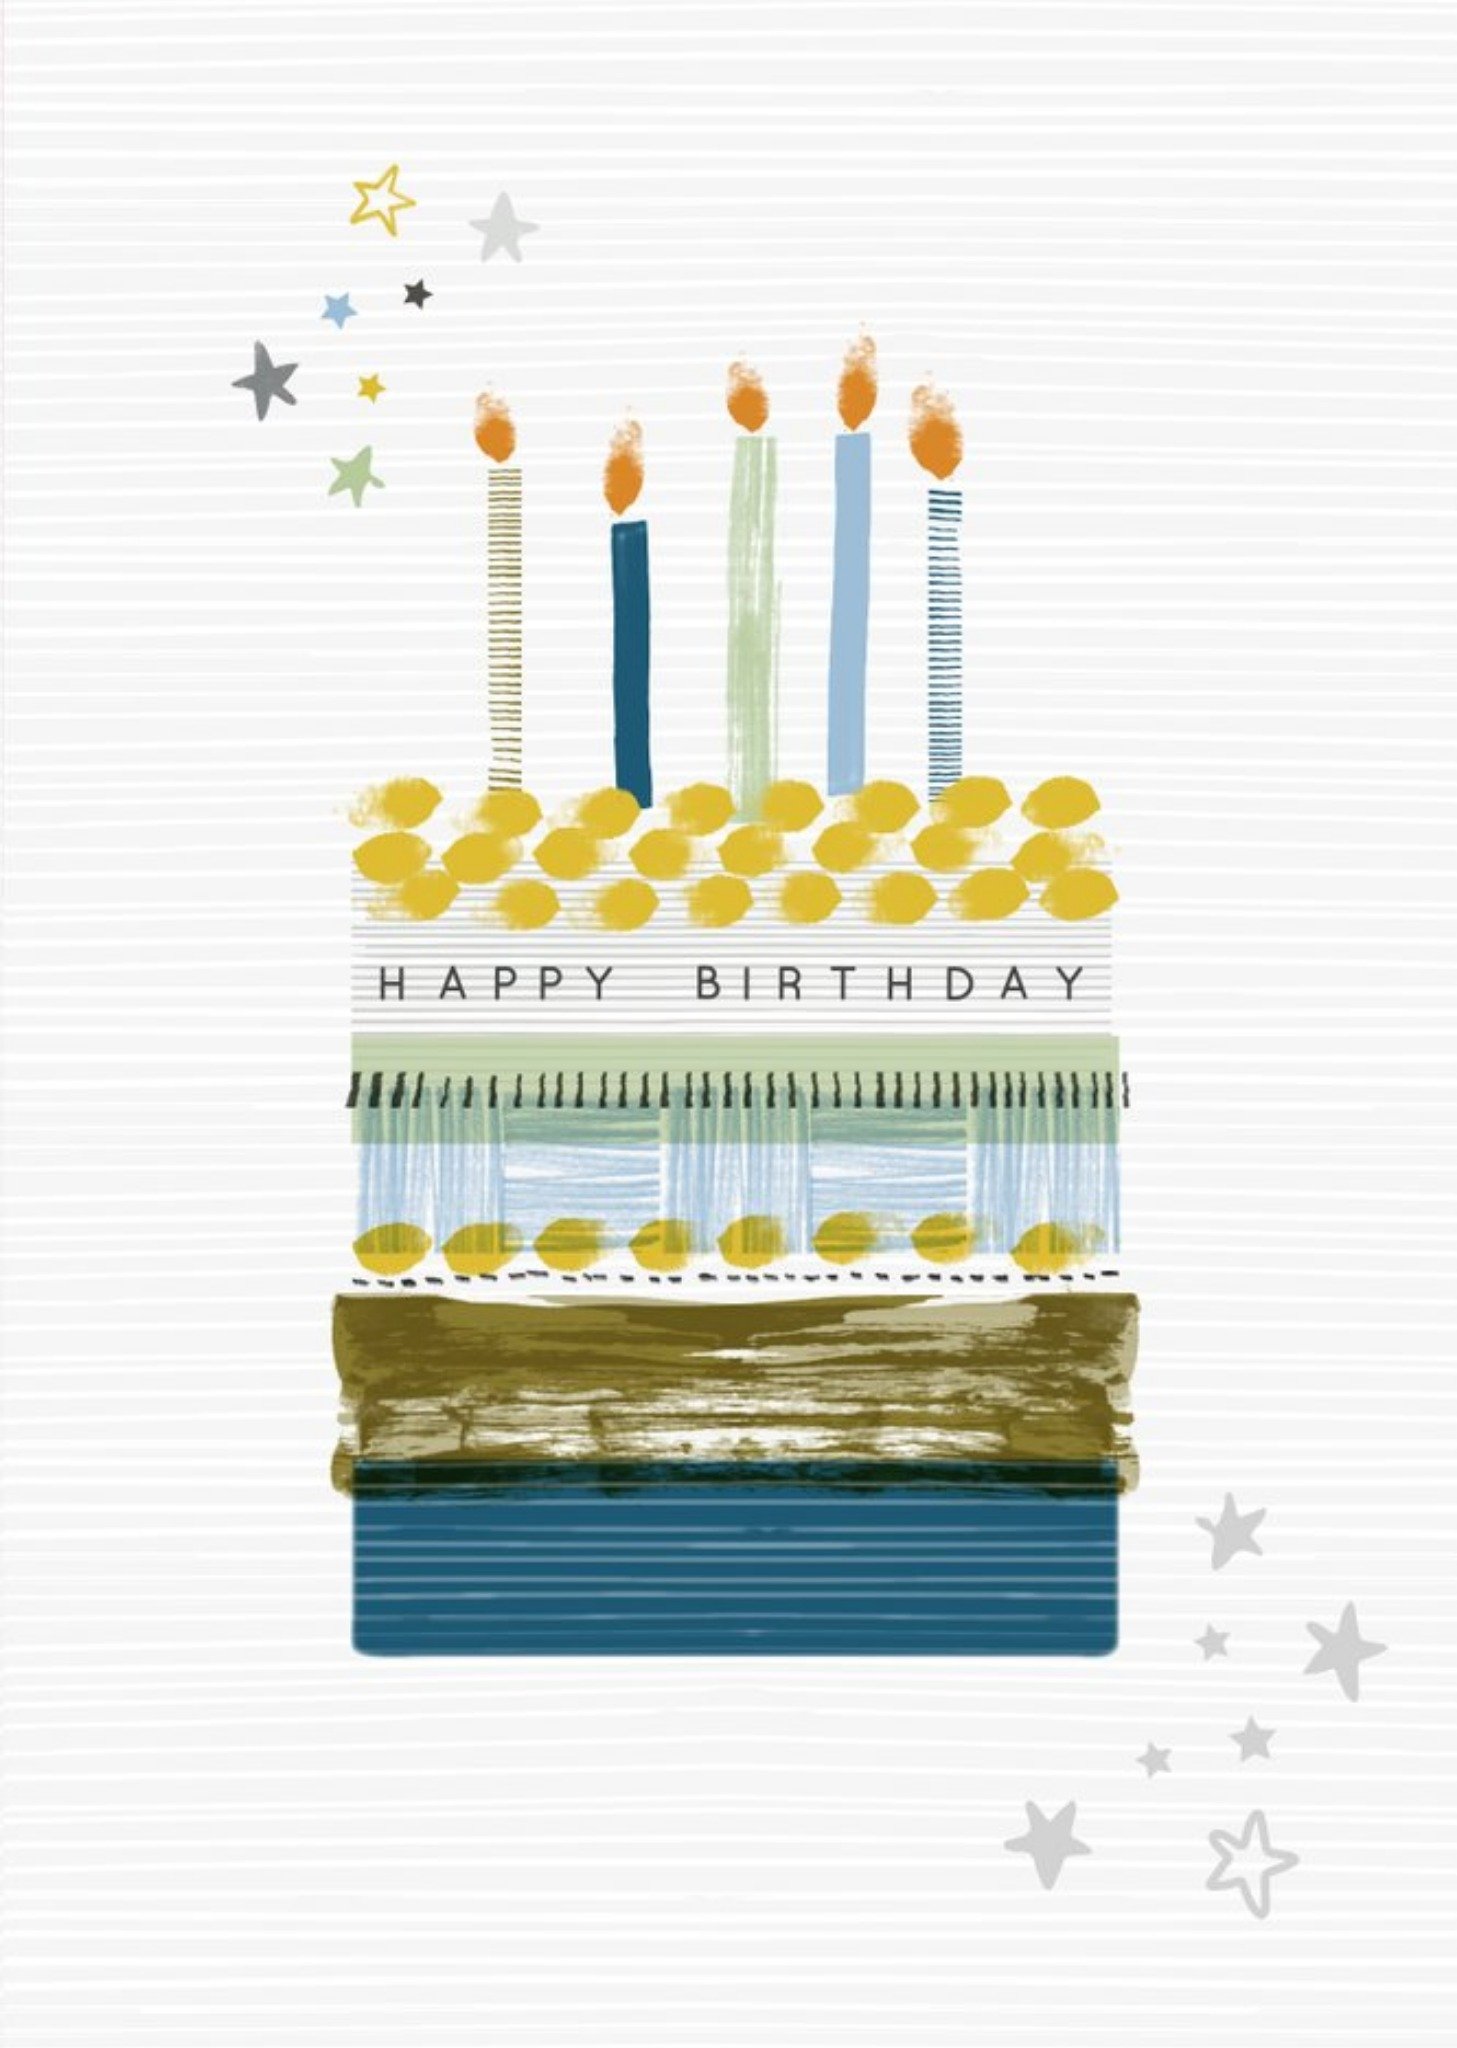 Moonpig Laura Darrington Illustrated Birthday Cake Birthday Card, Large